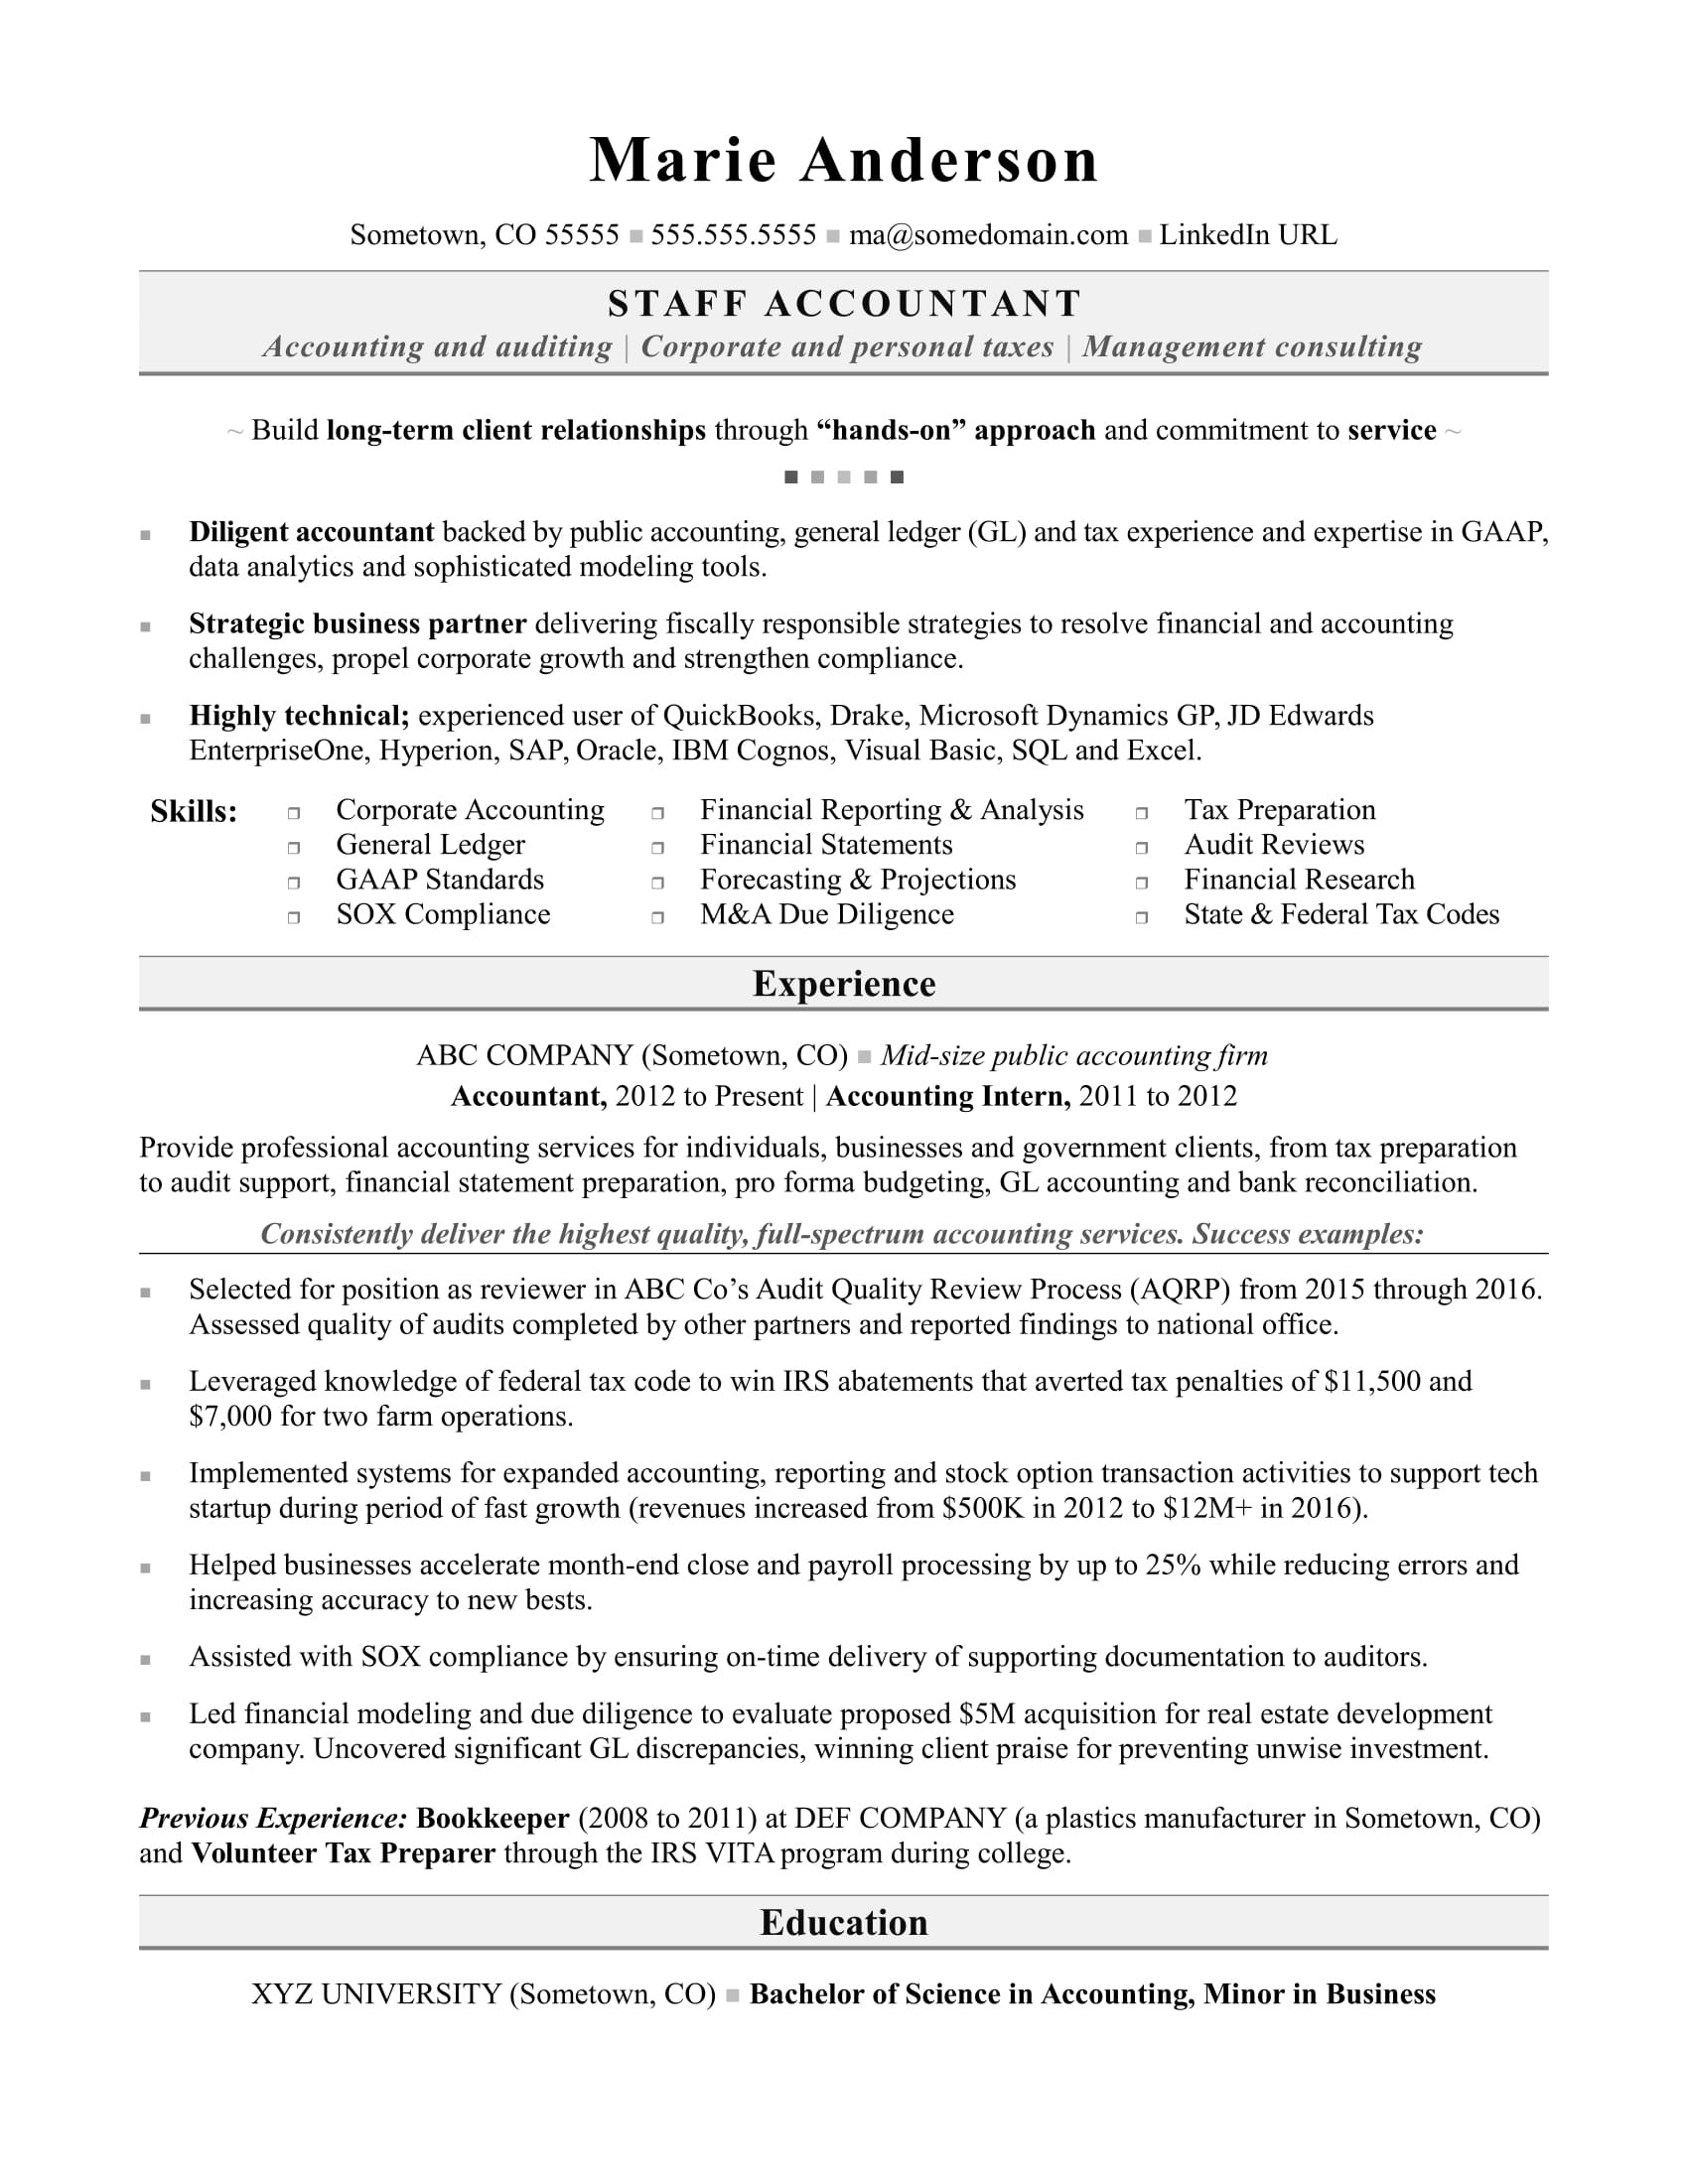 Resume Sample for Long Term Employment Accounting Resume Sample Monster.com